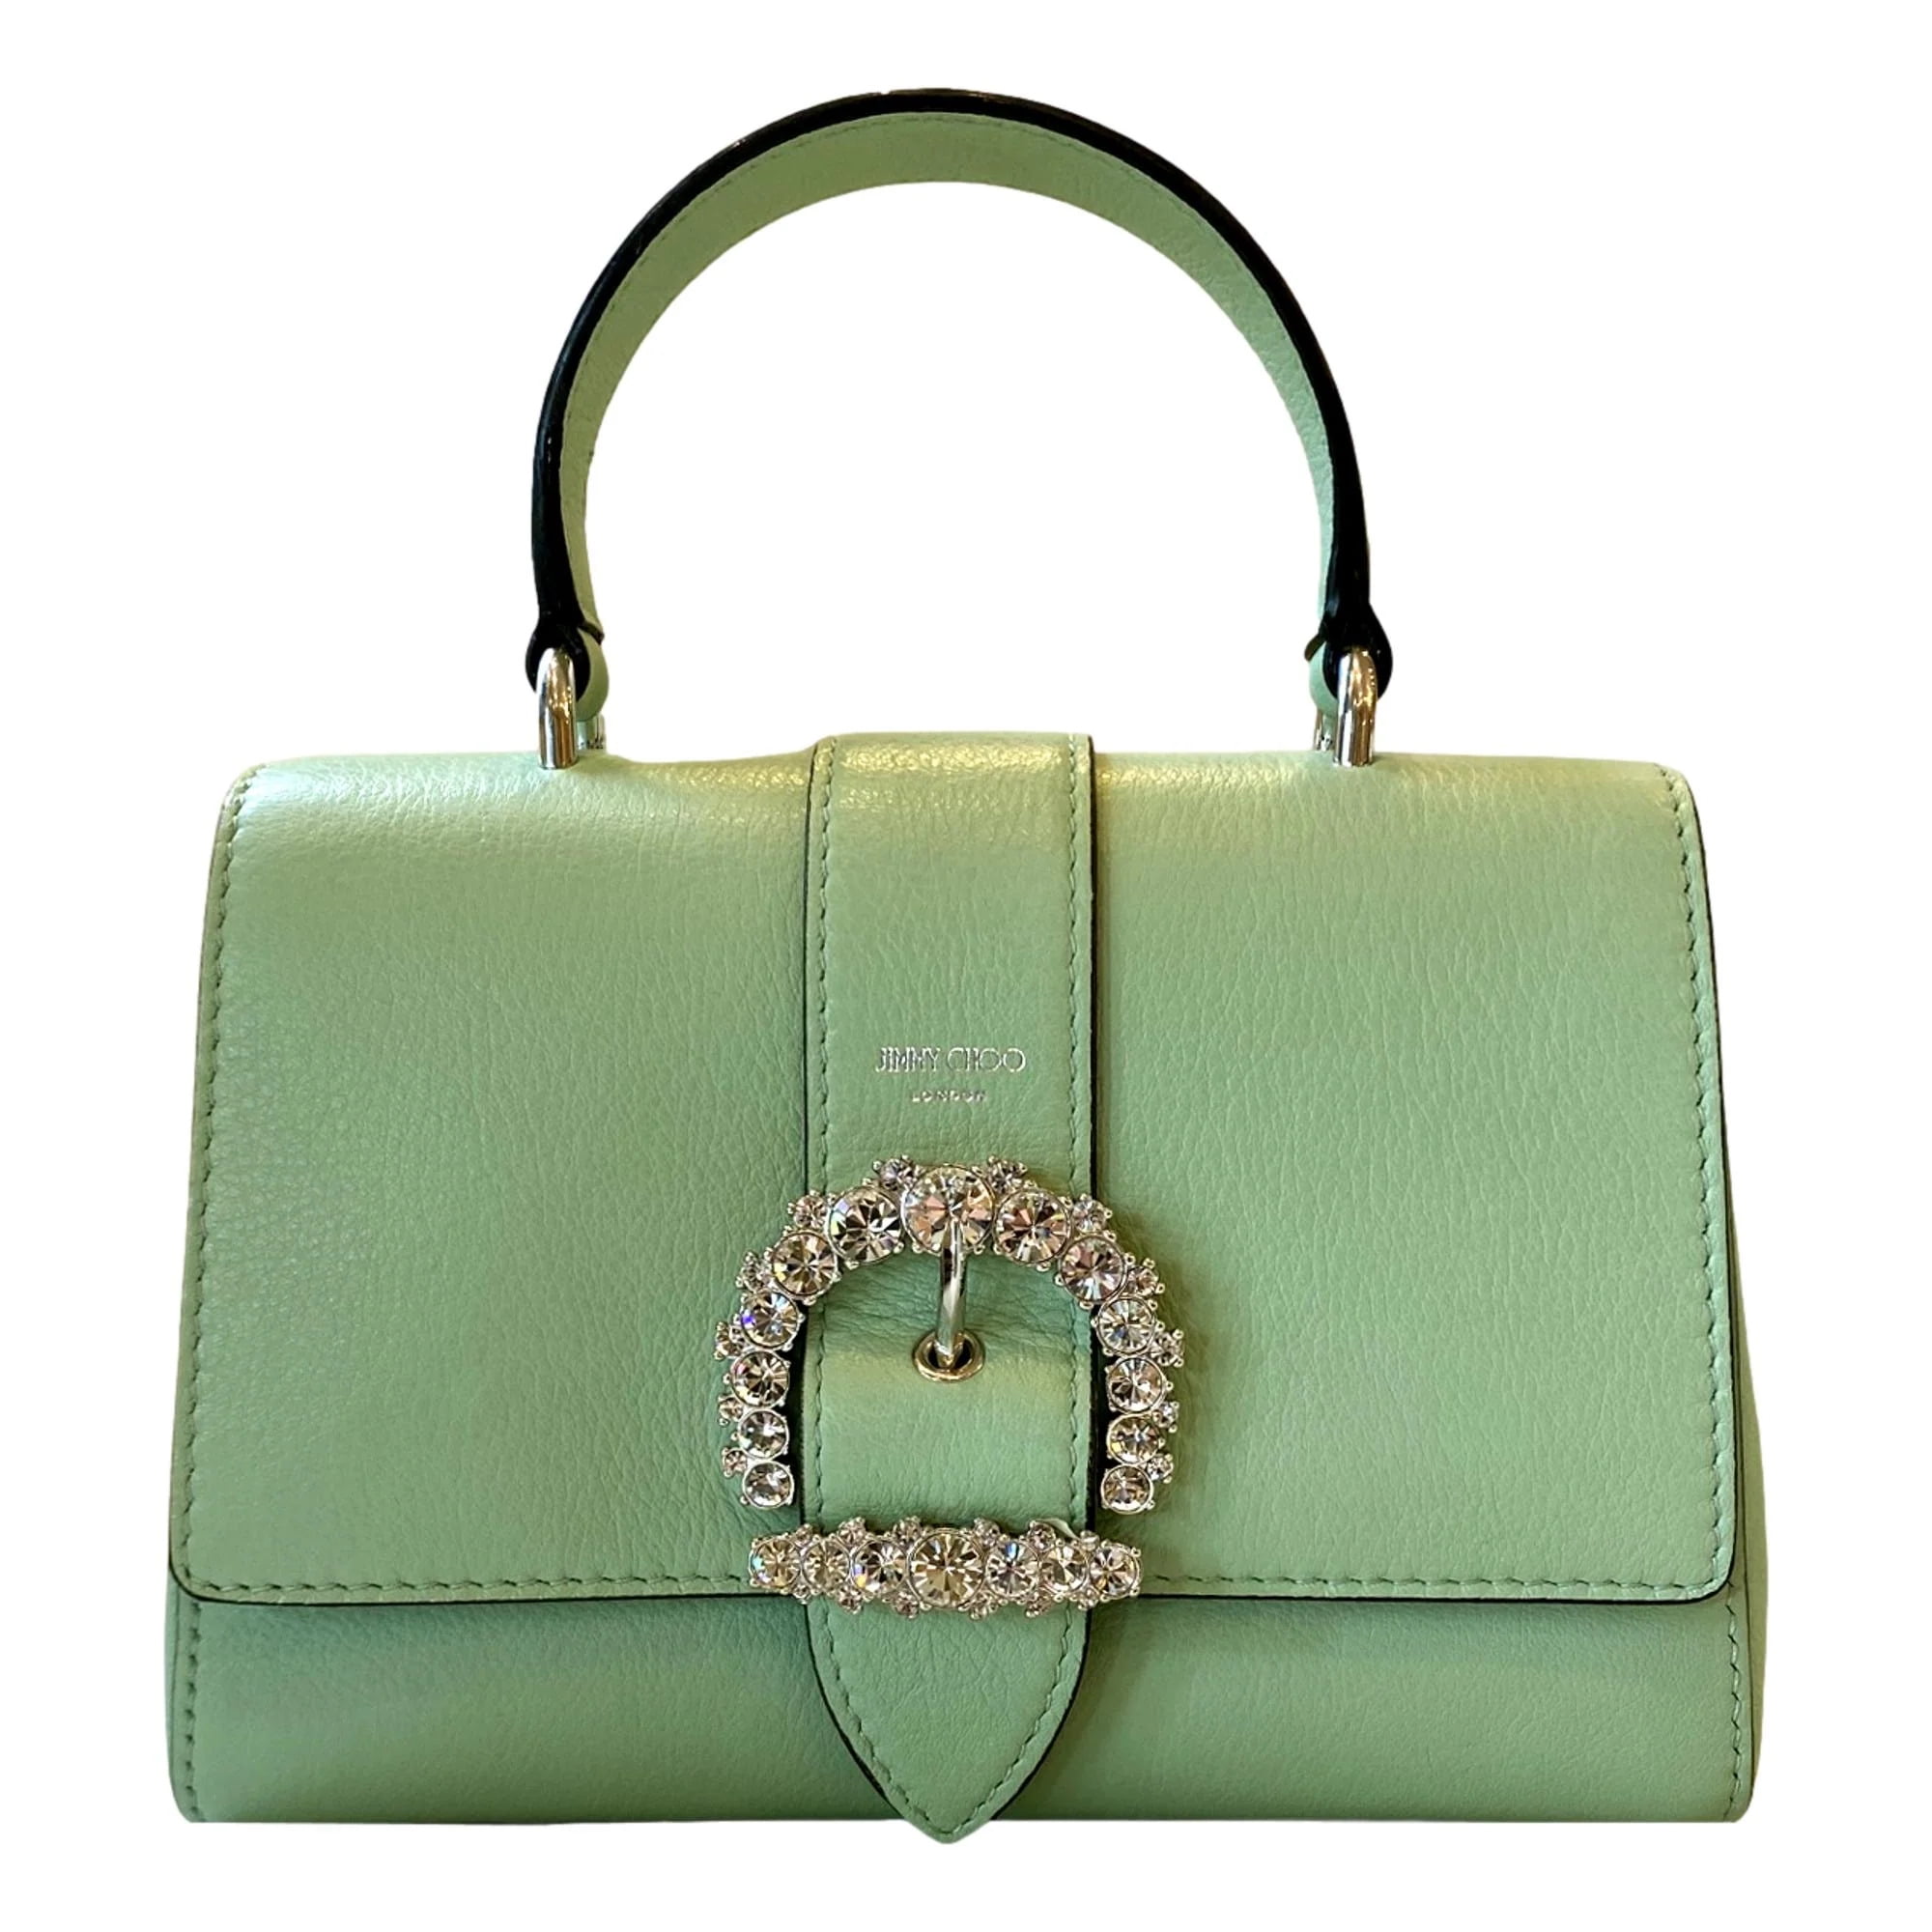 Jimmy Choo Cheri Mint Green Leather Top Handle Bag OSQM | 028 - Walmart.com